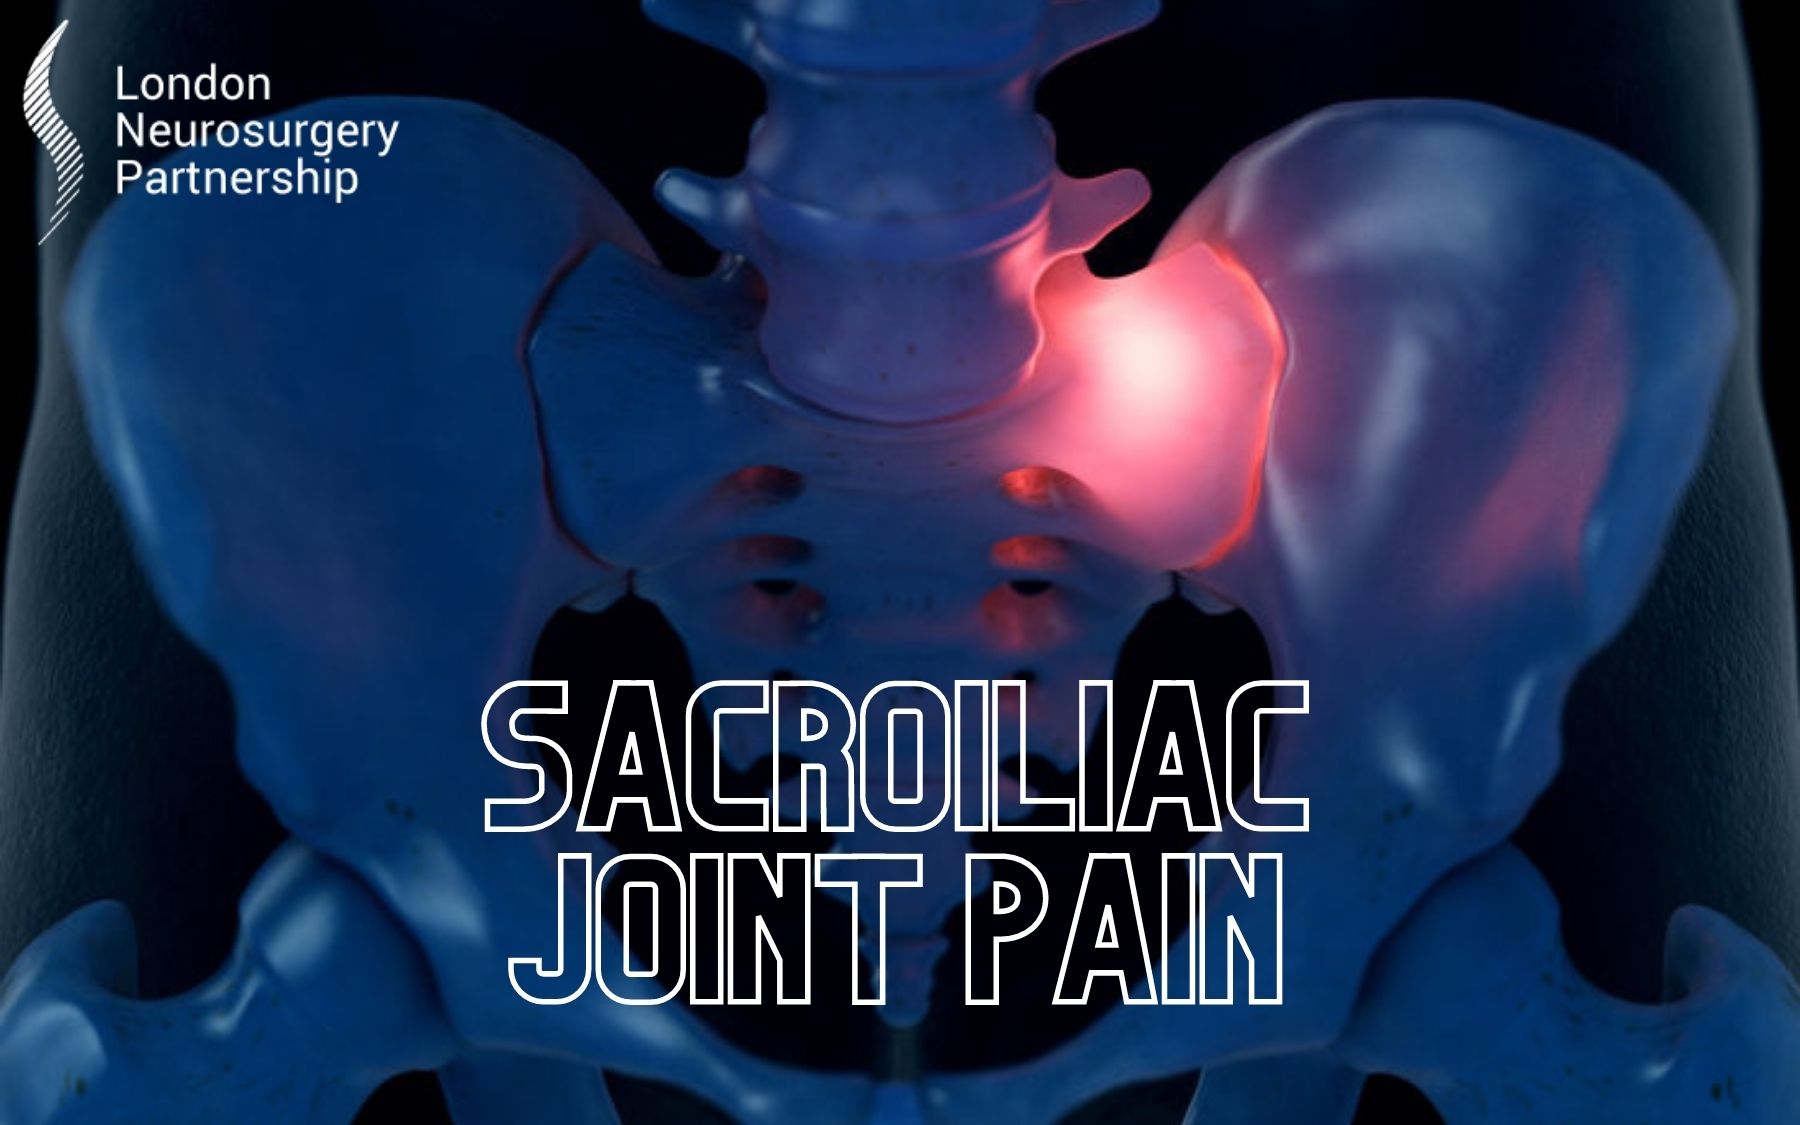 Sacroiliac Joint Pain London Neurosurgery Partnership Spine Neurosurgery